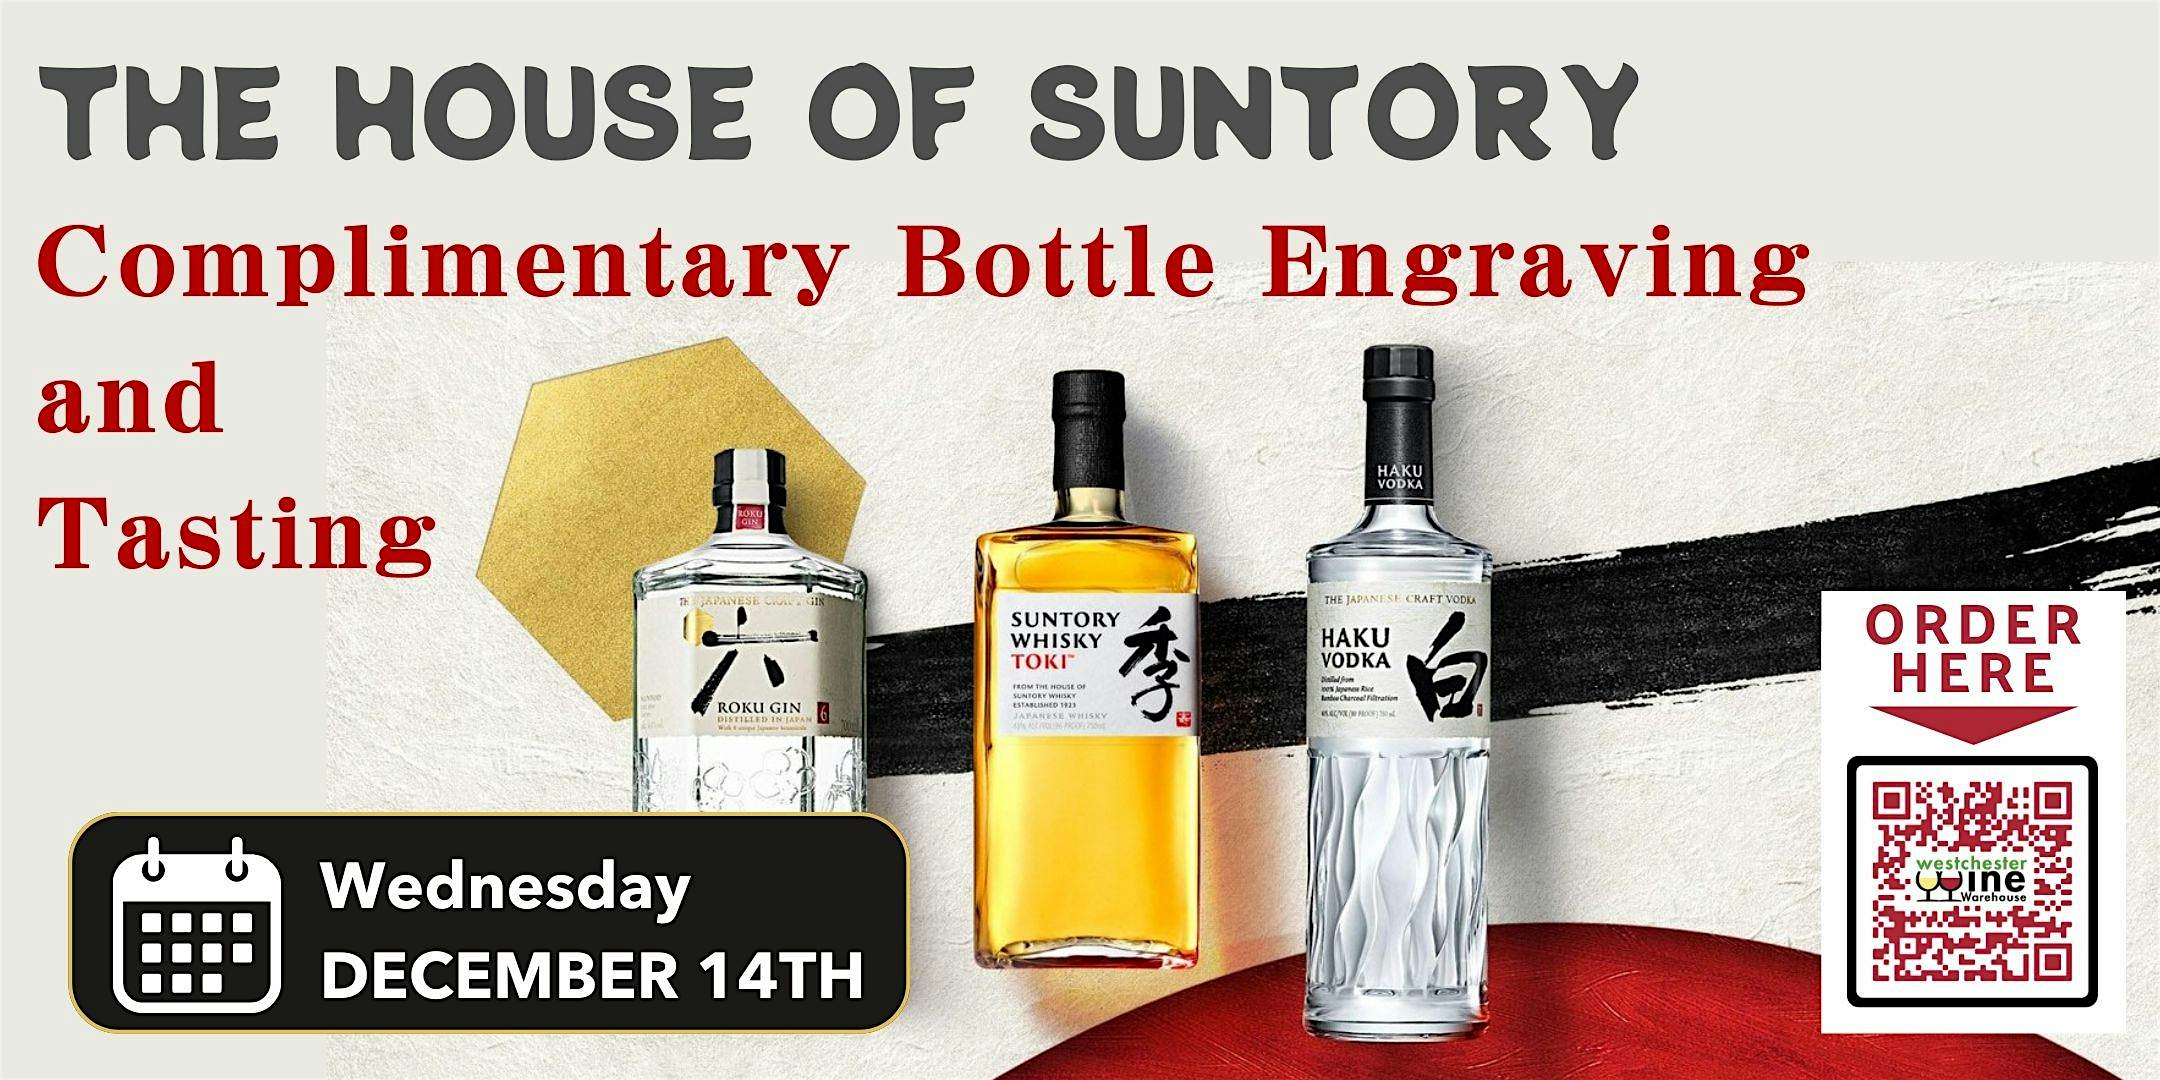 House of Suntory Bottle Engraving Event &amp; Complimentary Tasting